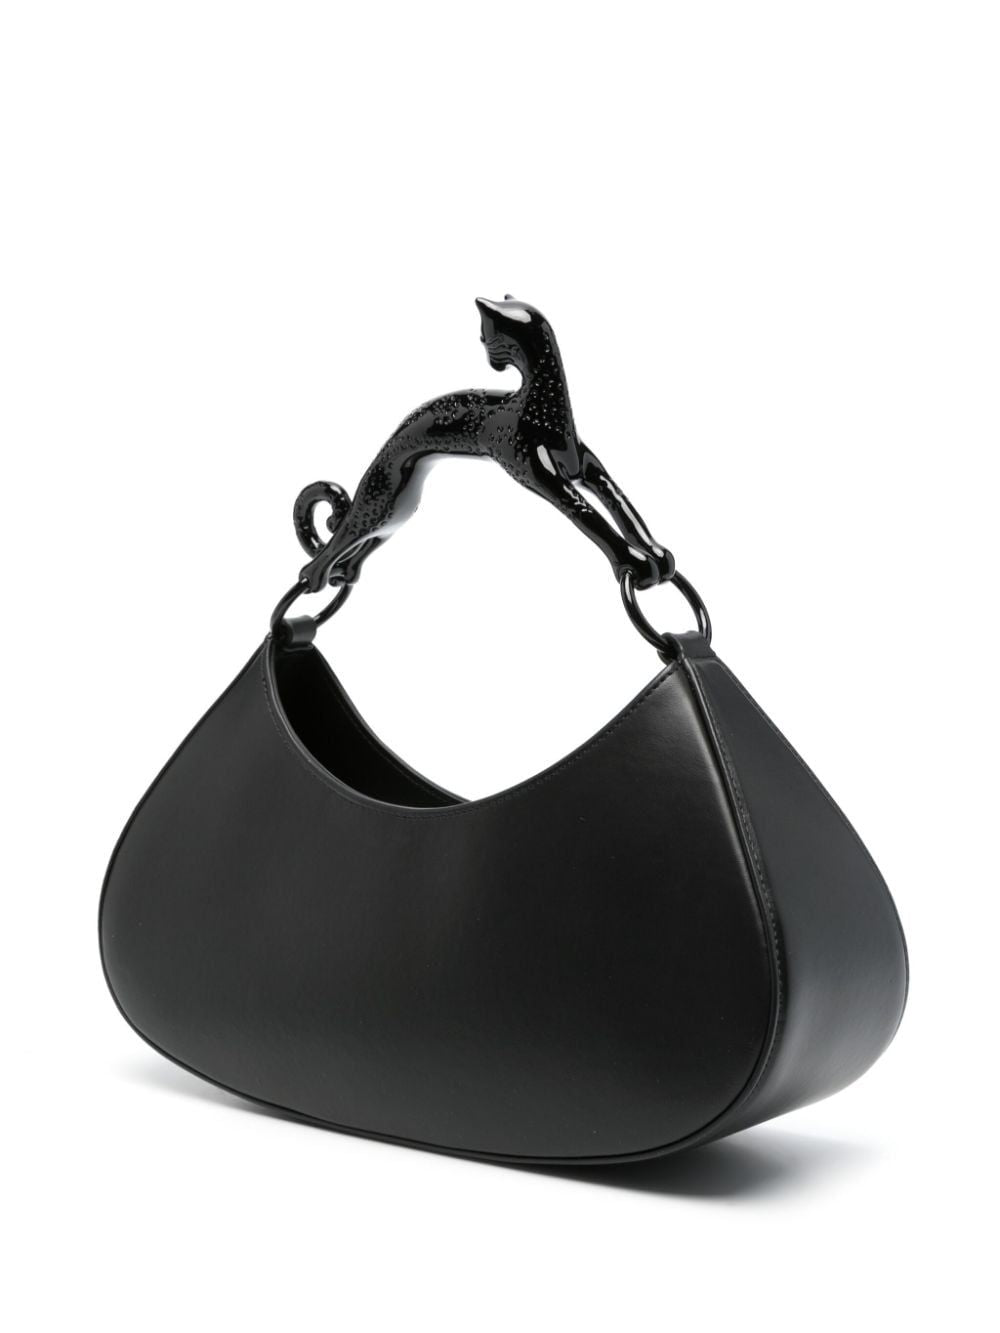 Hobo Handbag CAT LARGE Handbag